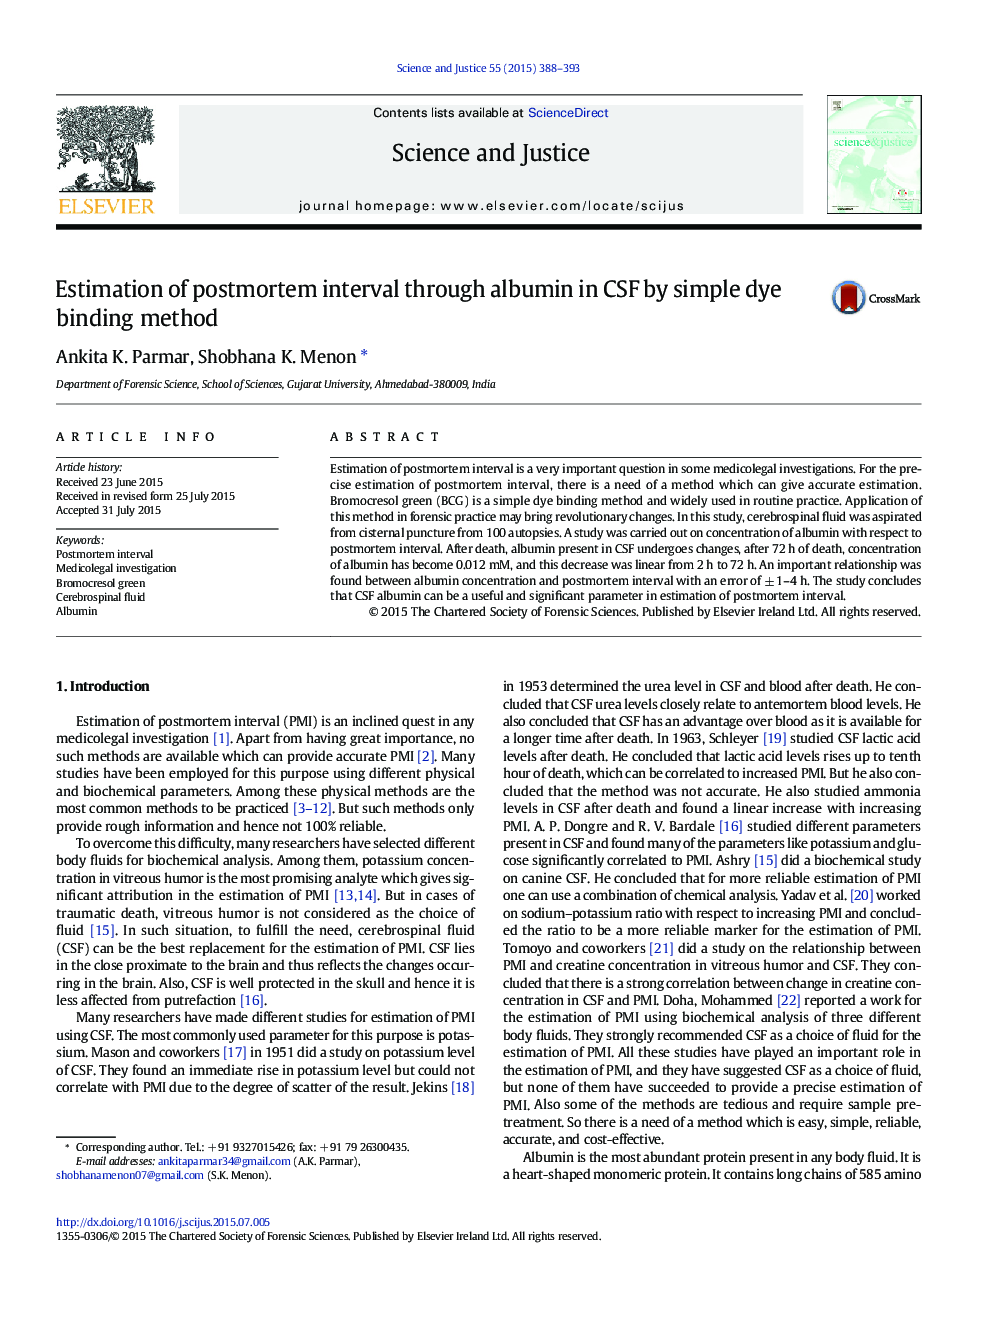 Estimation of postmortem interval through albumin in CSF by simple dye binding method